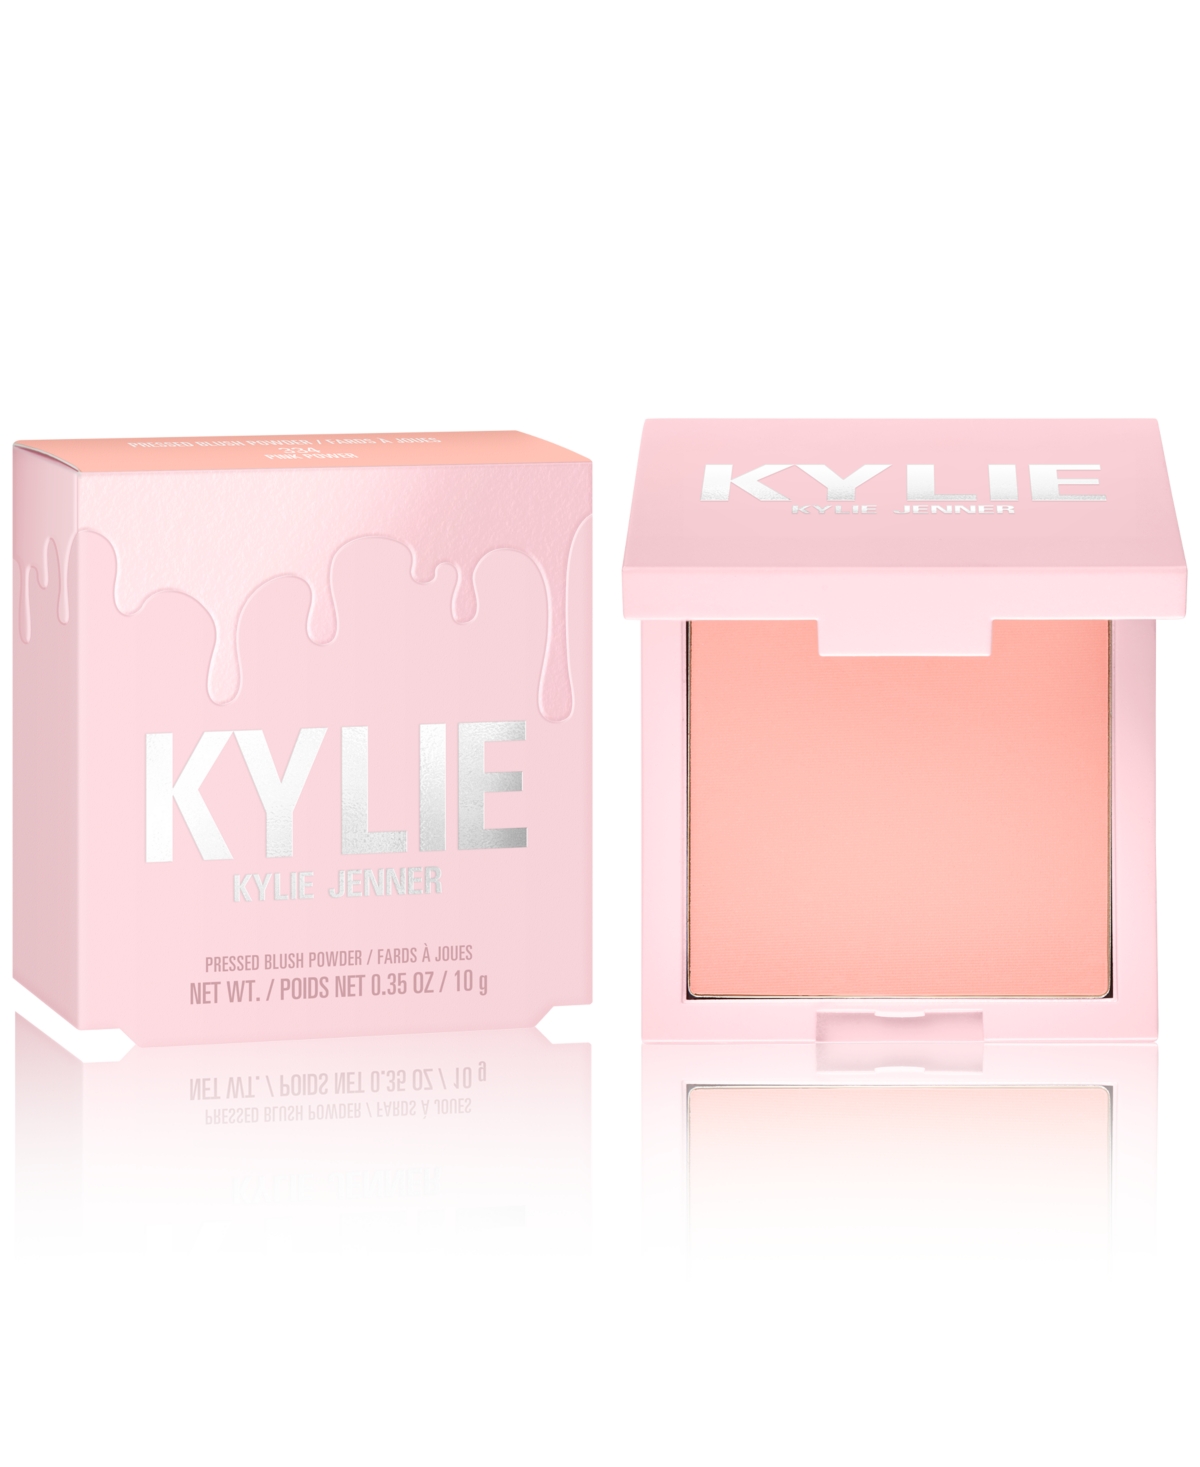 Kylie Cosmetics Pressed Blush Powder In Pink Power